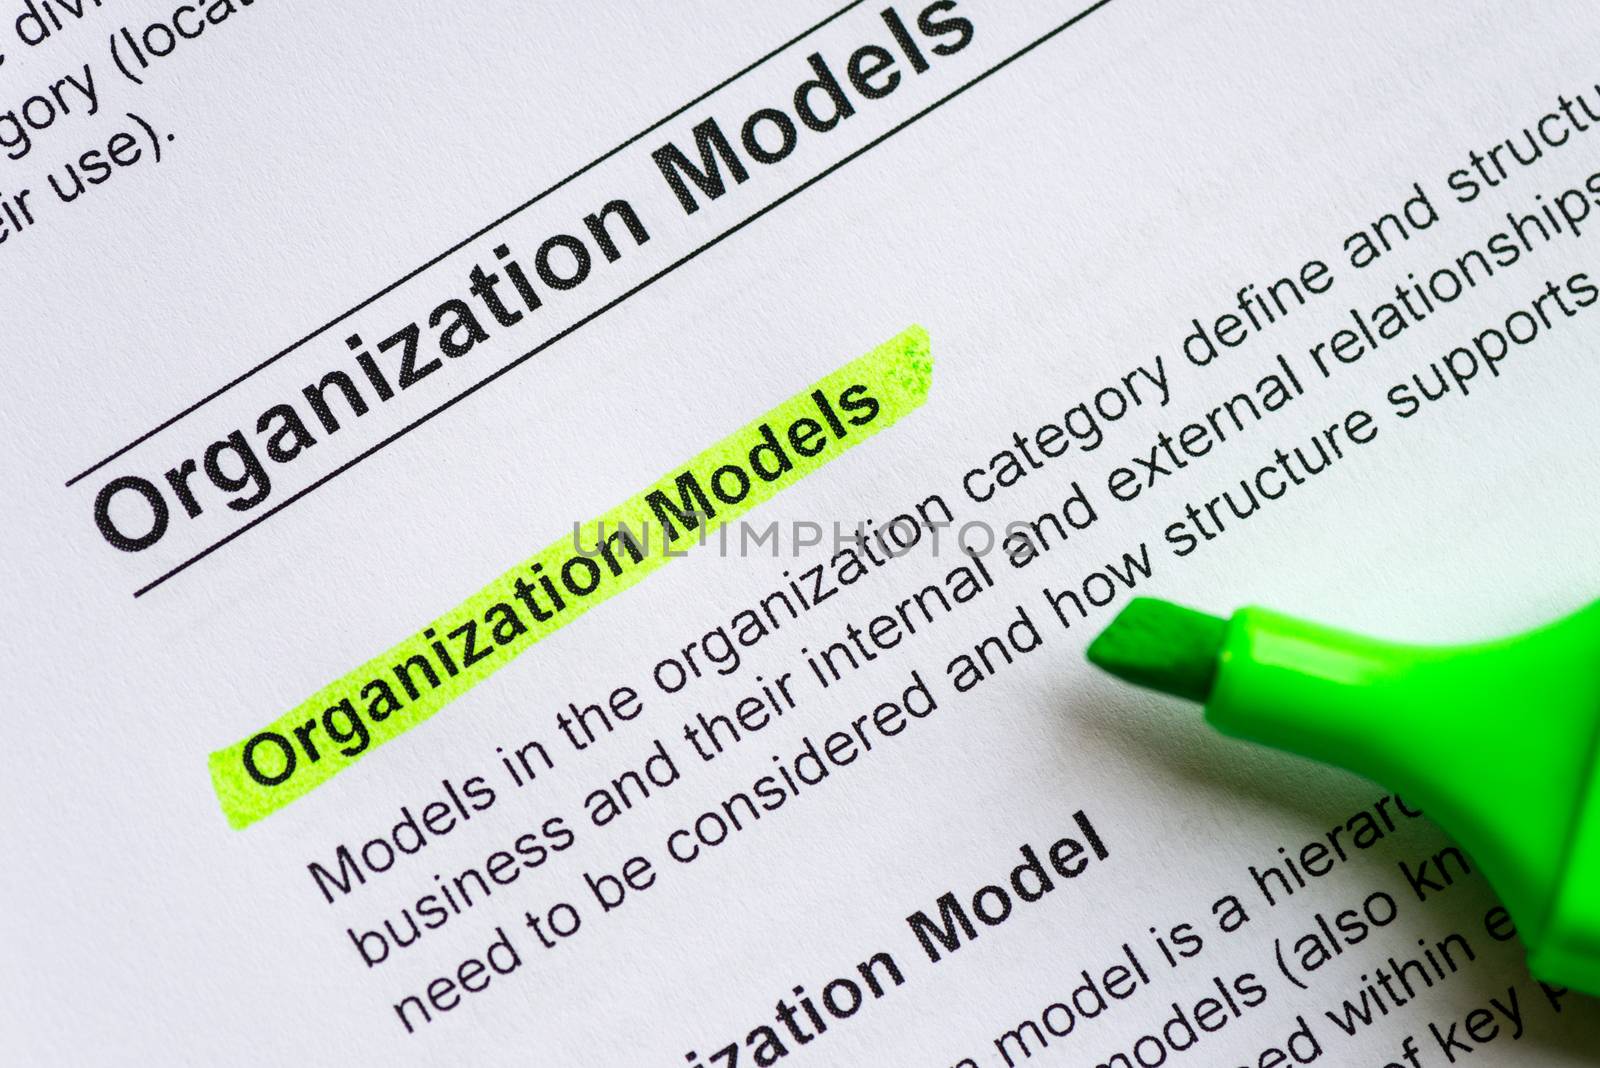 organization models sentence highlighted by green marker